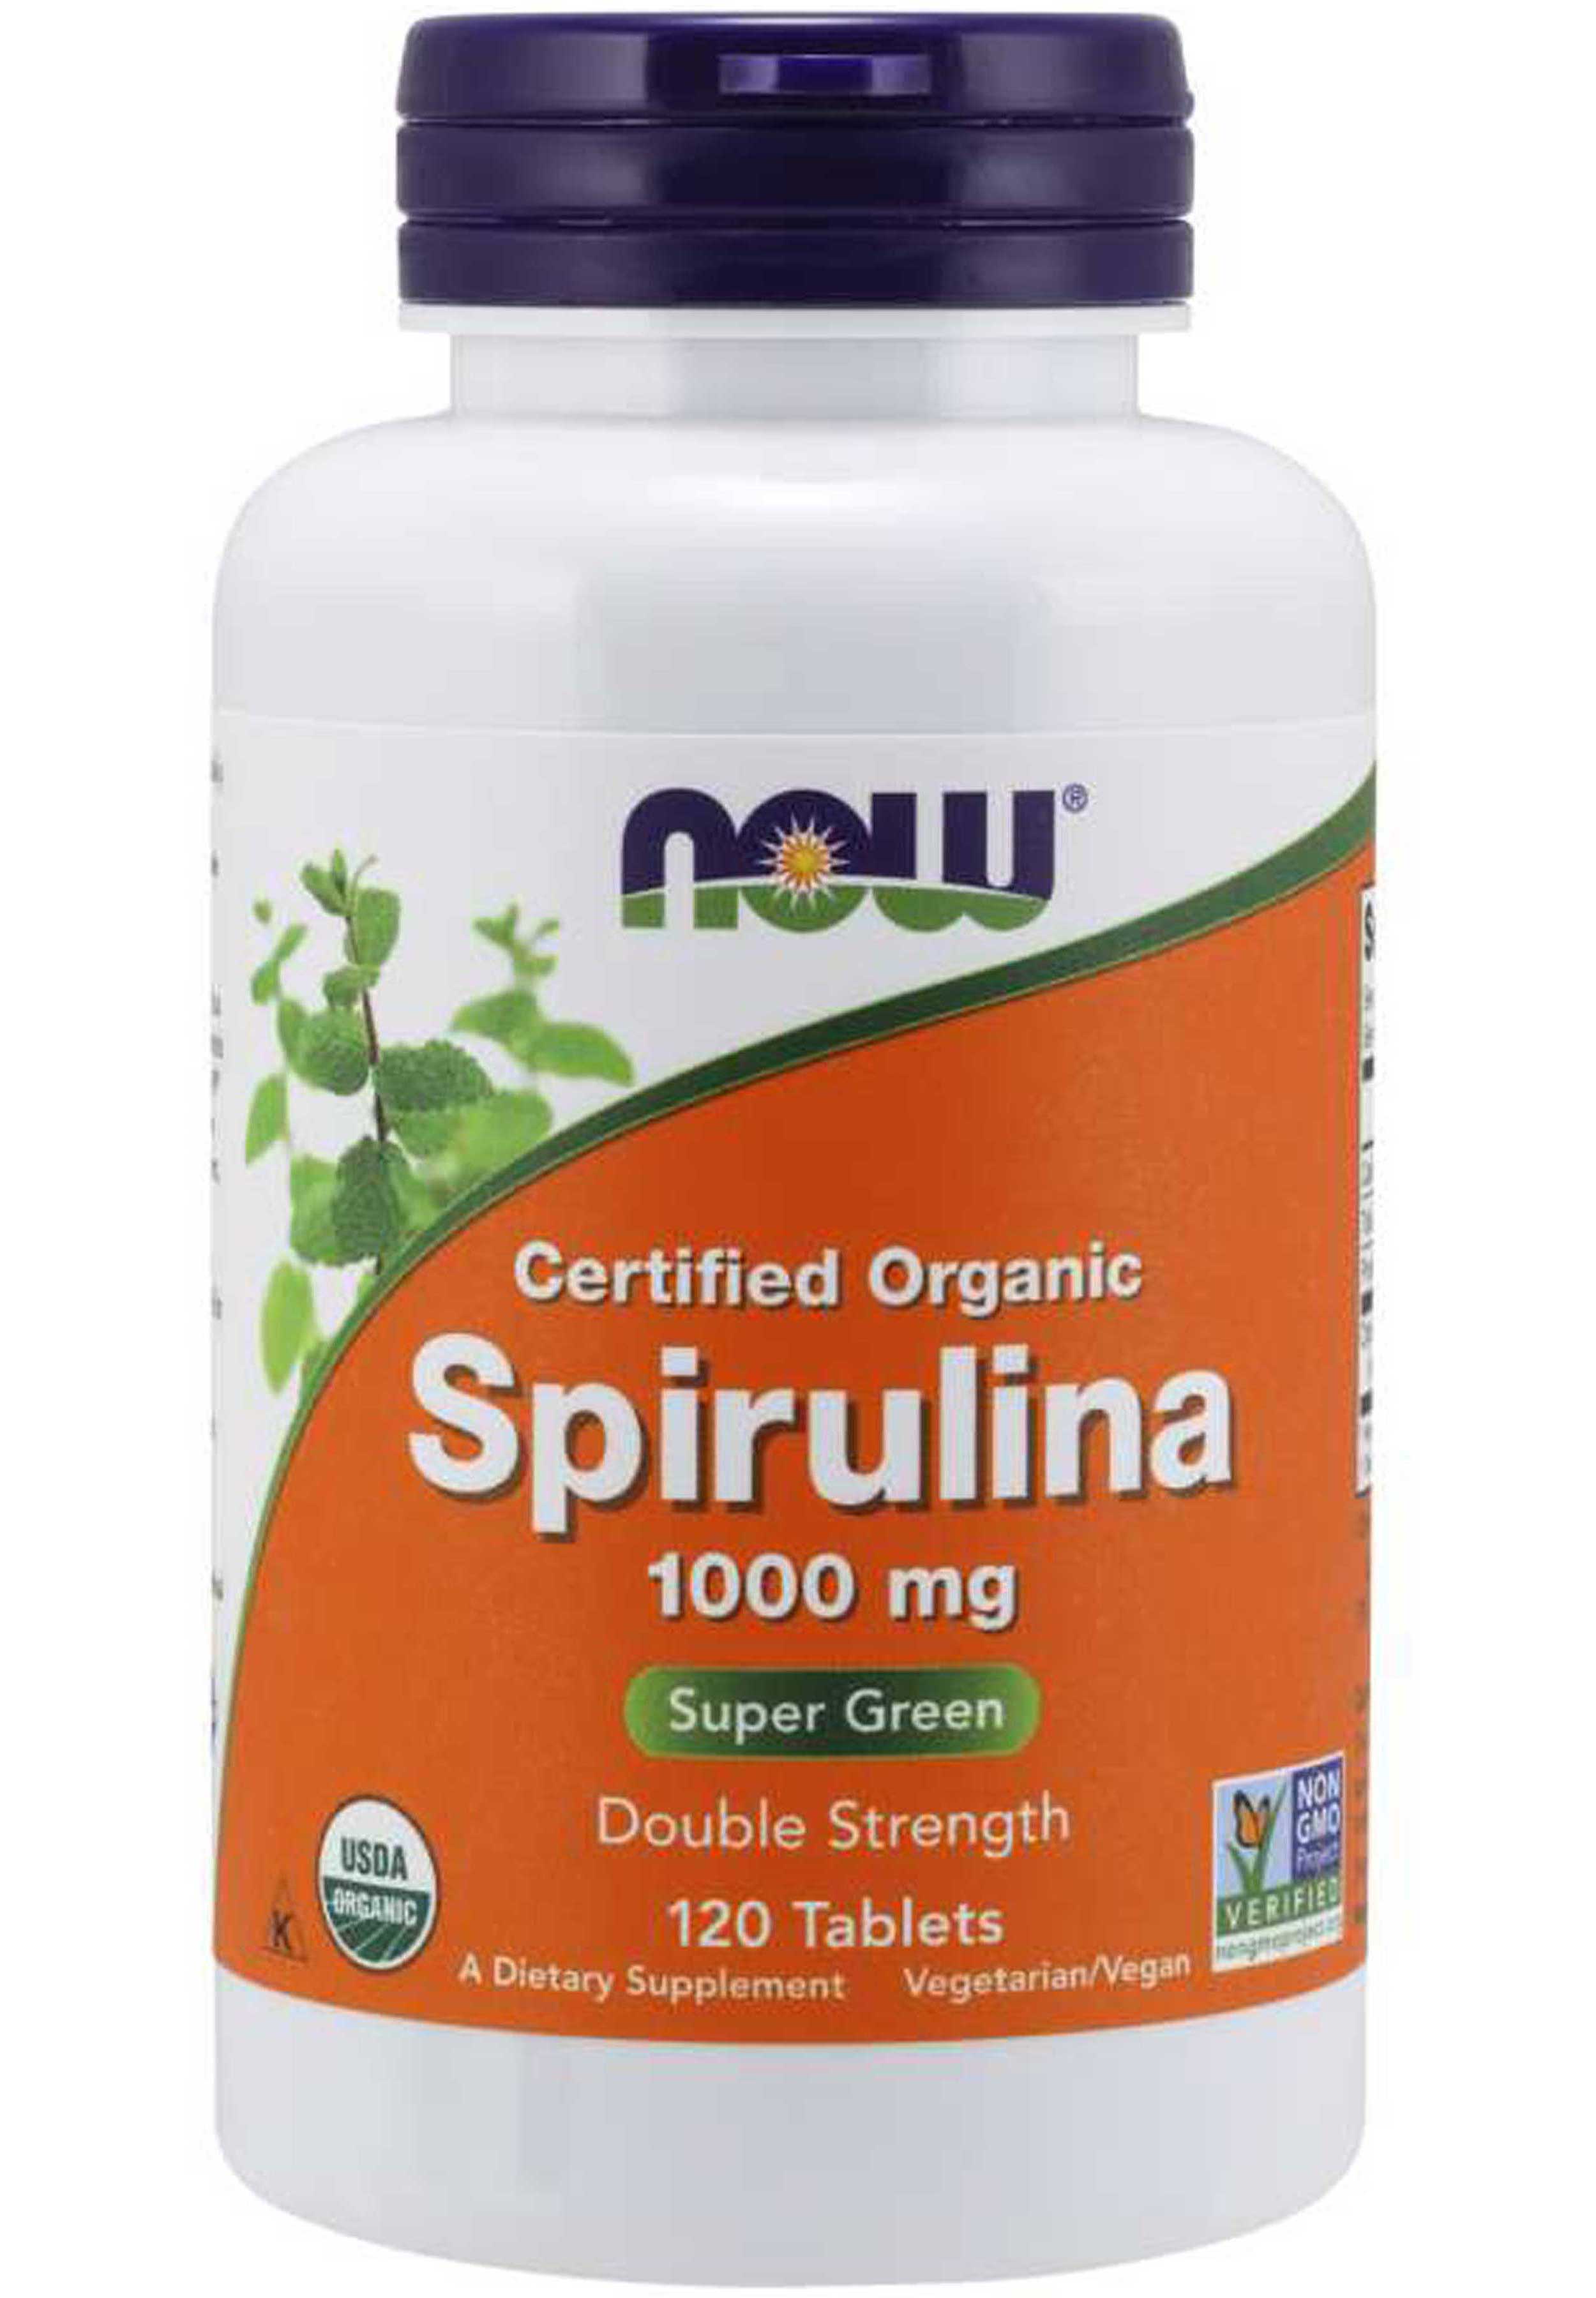 NOW Organic Spirulina